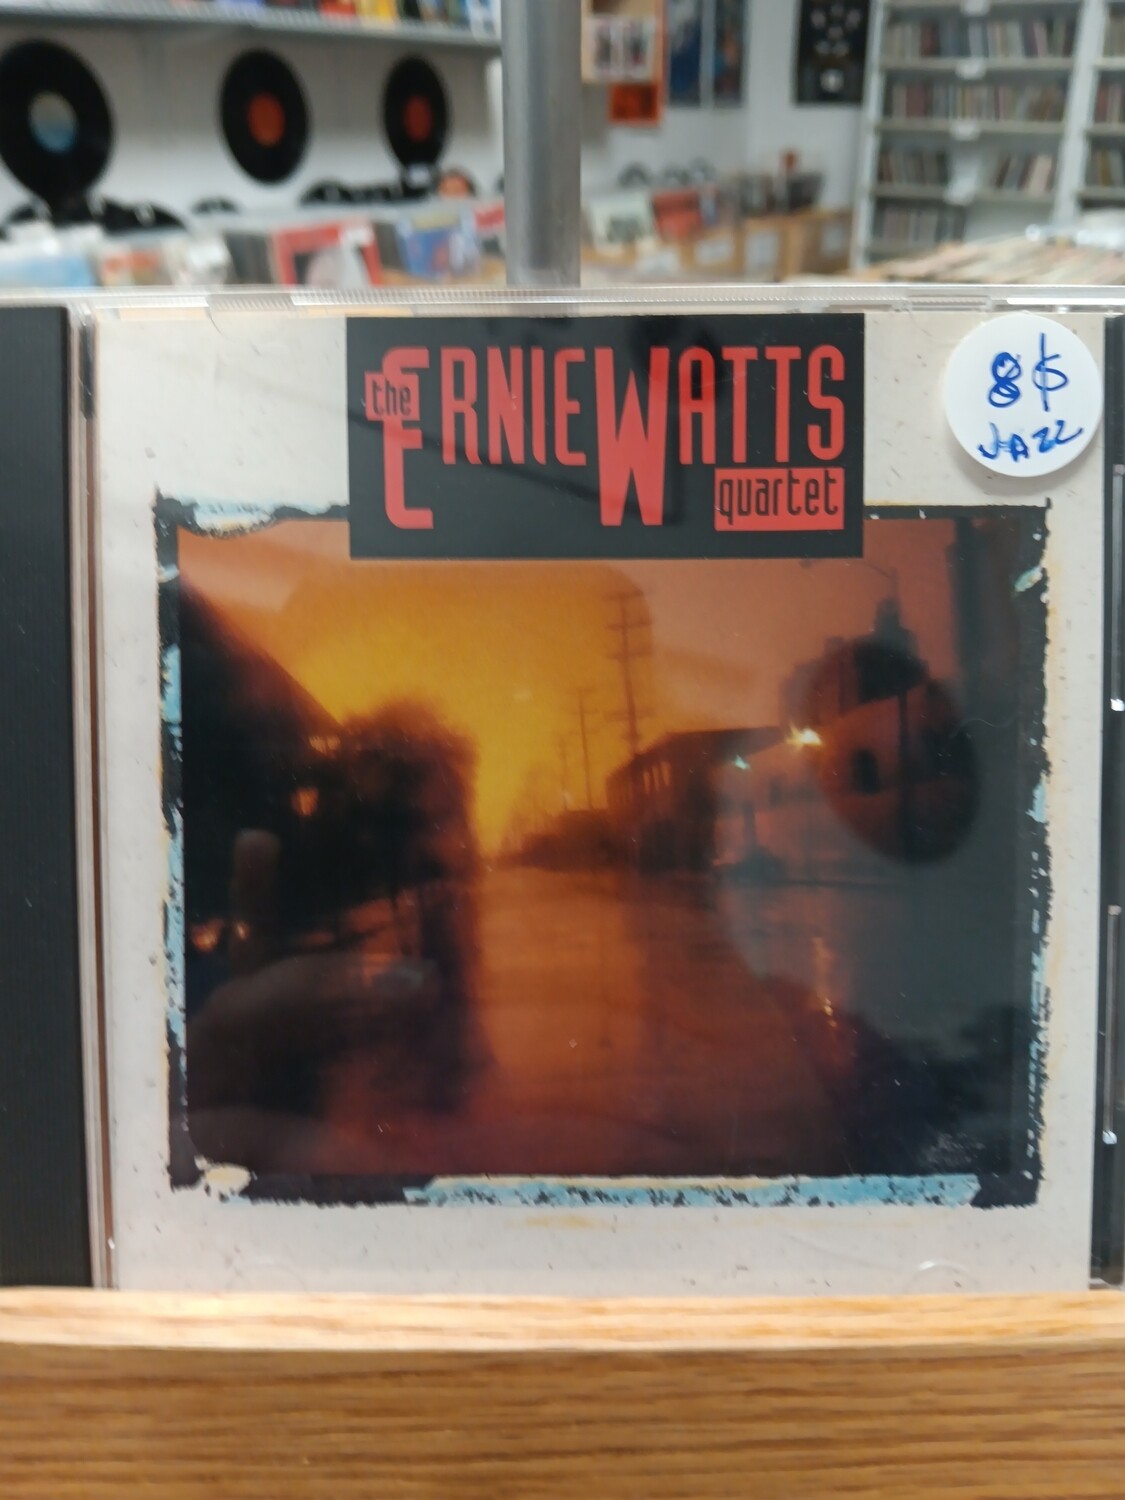 THE ERNIE WATTS QUARTET - The Ernie Watts Quartet (CD)